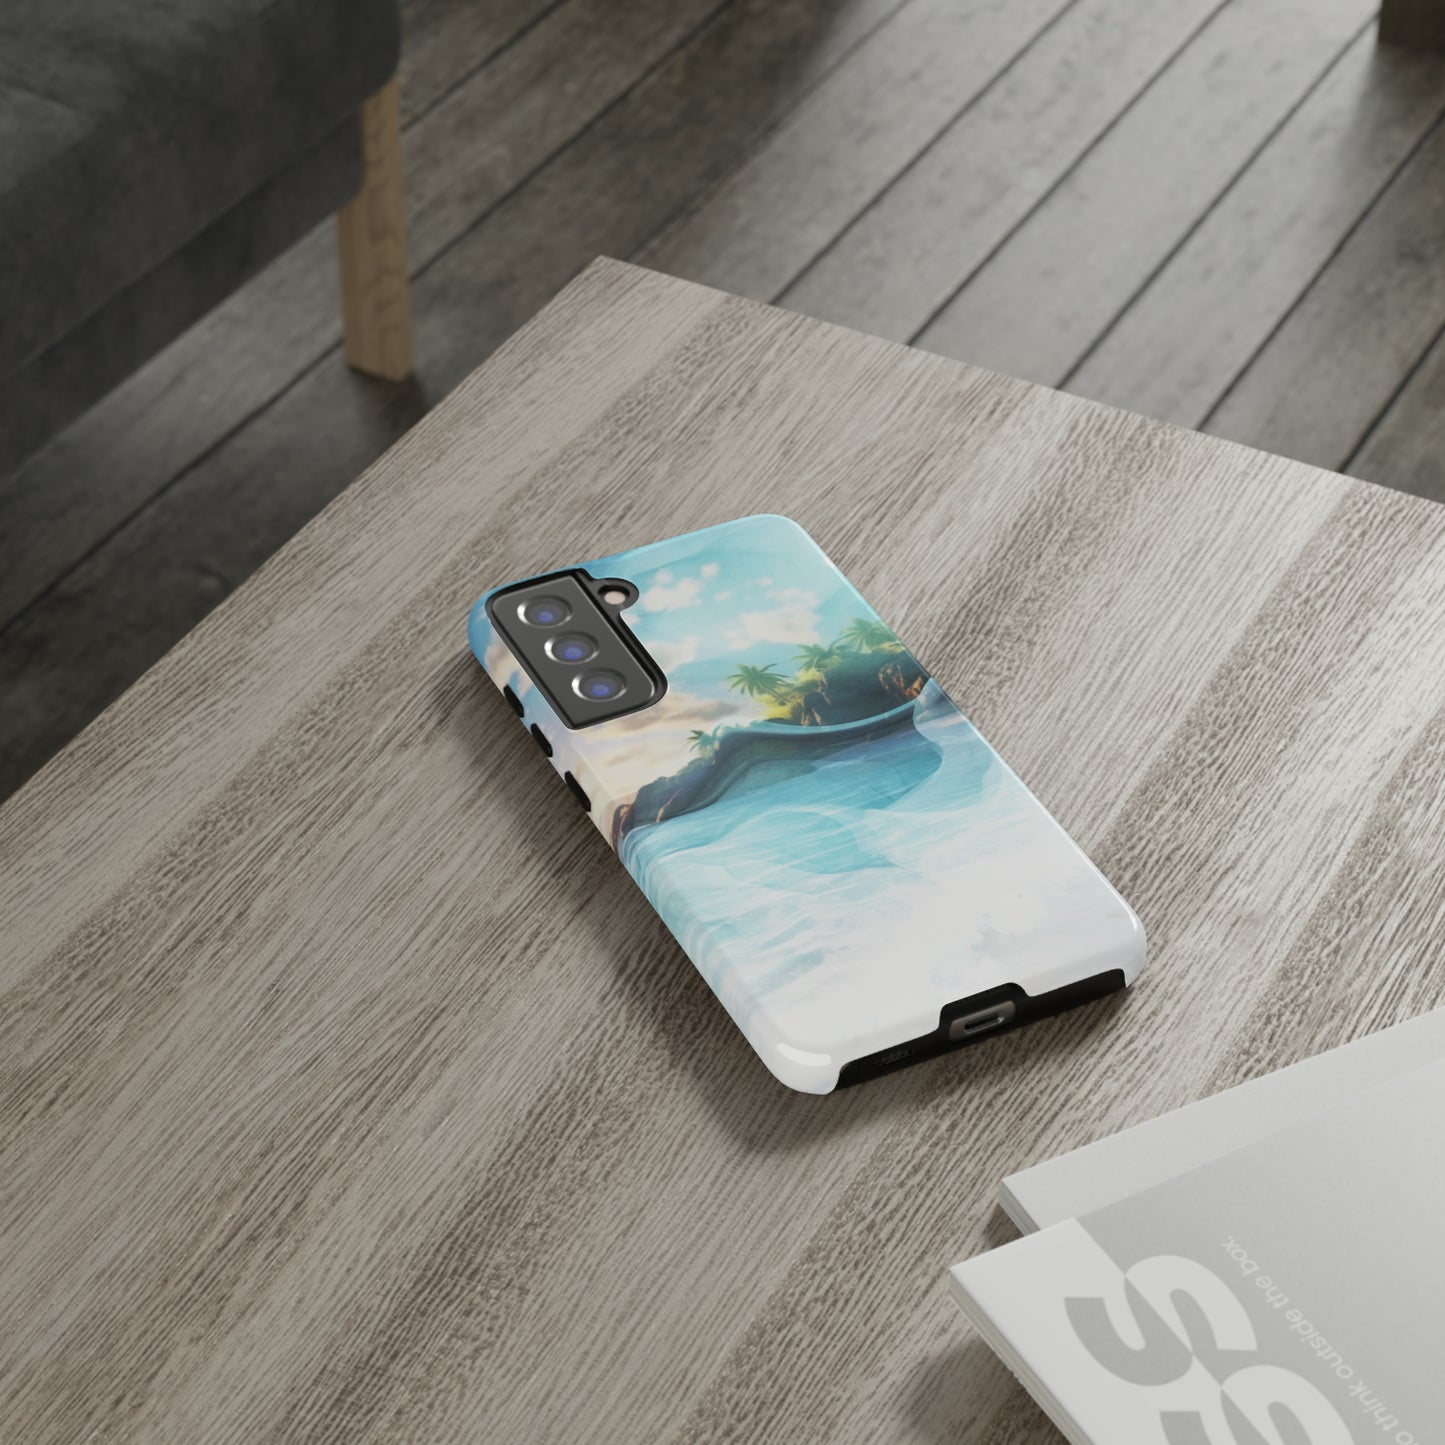 Dreamscape Tropical Beach Tough Case - Neduz Designs for iPhone, Samsung, Google Pixel